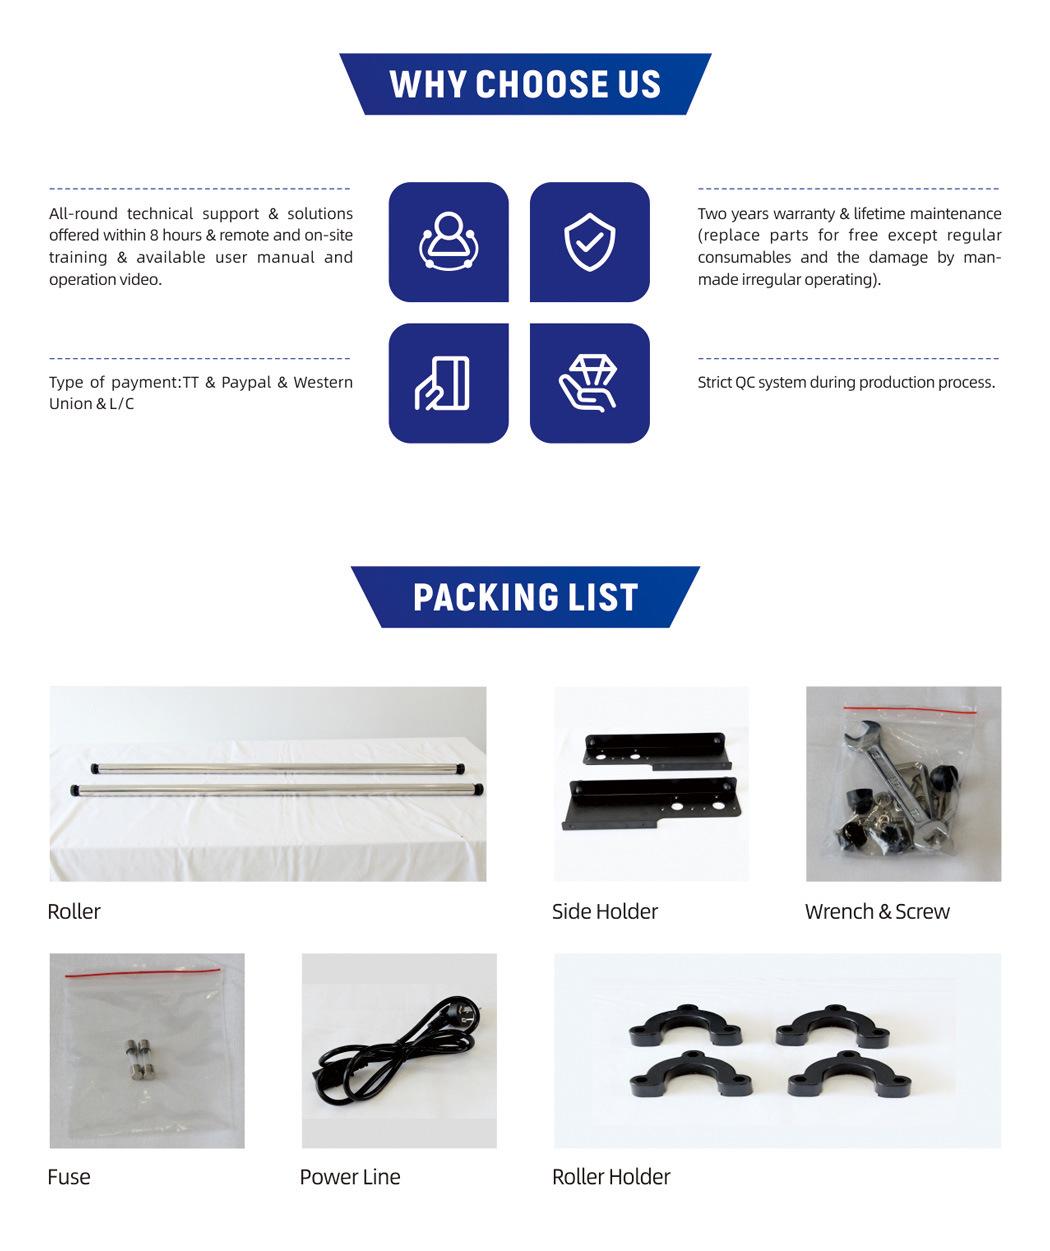 Vicut Rts130 Automatic Roll Slitting Cutting Machine for Cutting Pet PVC PP Materials